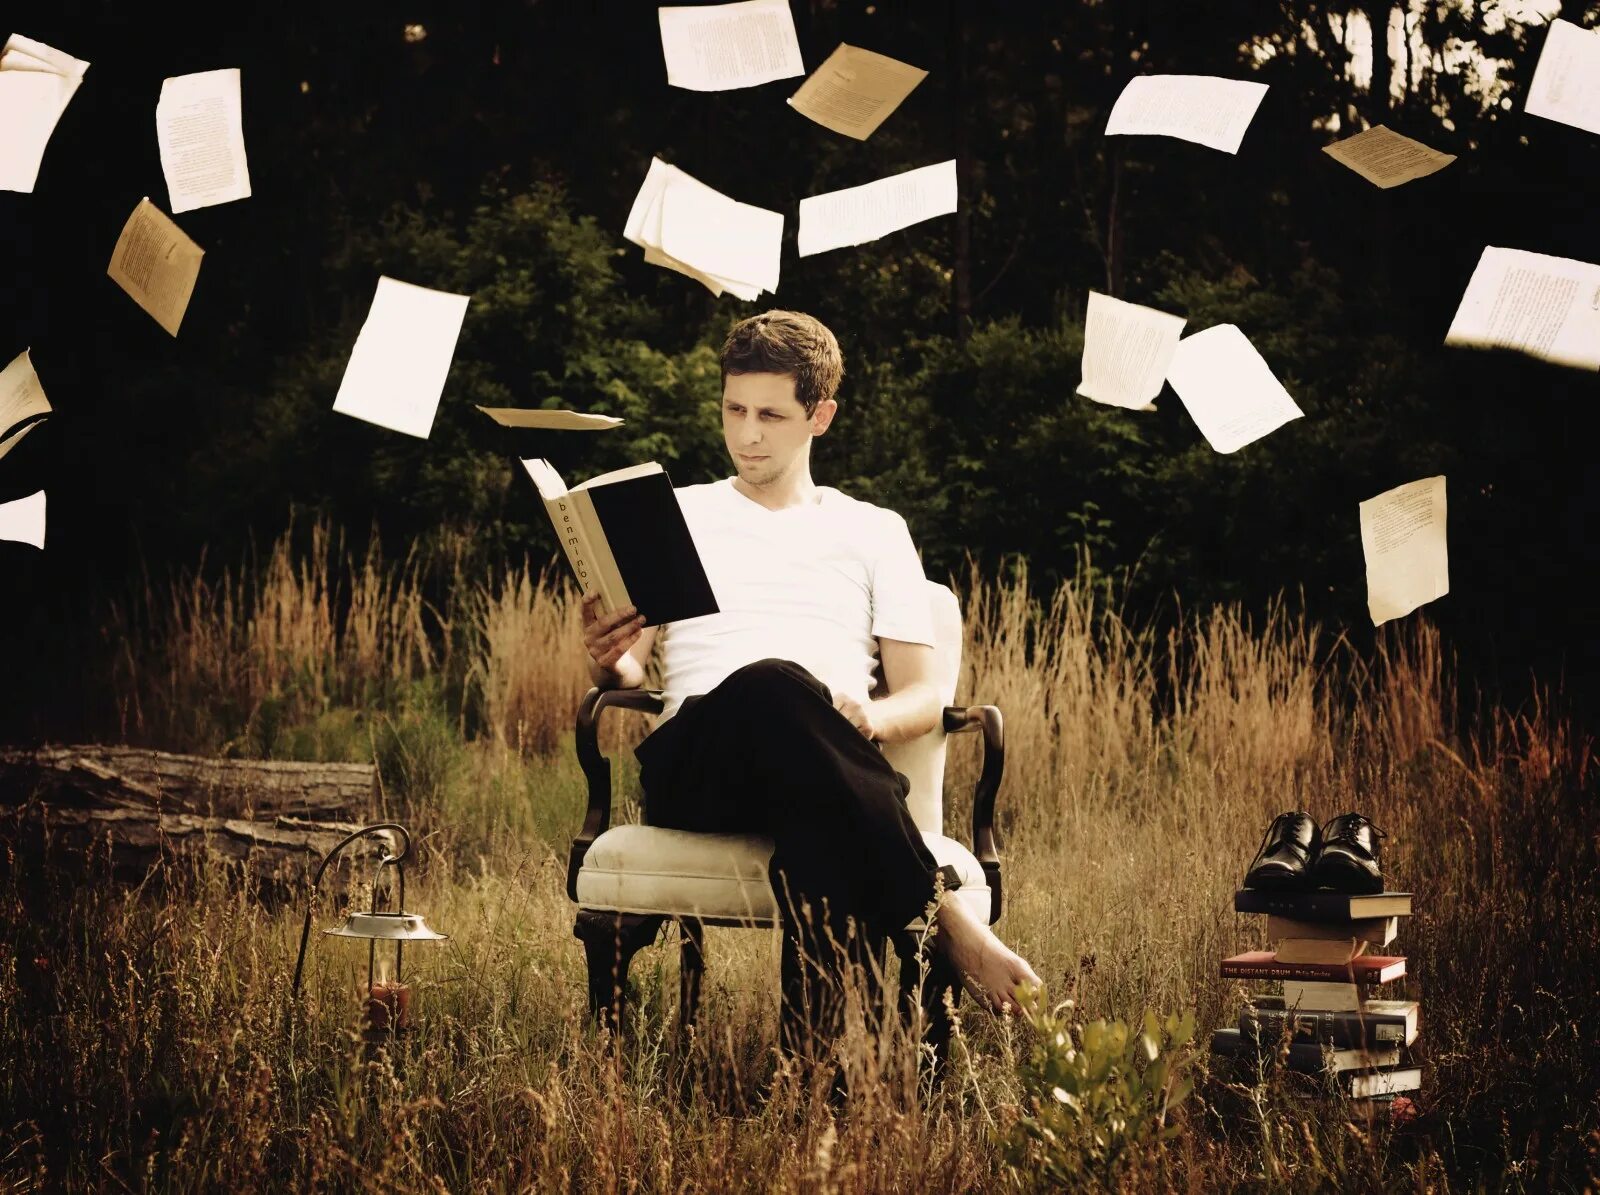 Creative reading. Человек с бумагами. Саморазвитие. Чтение Эстетика. Человек над бумагами.